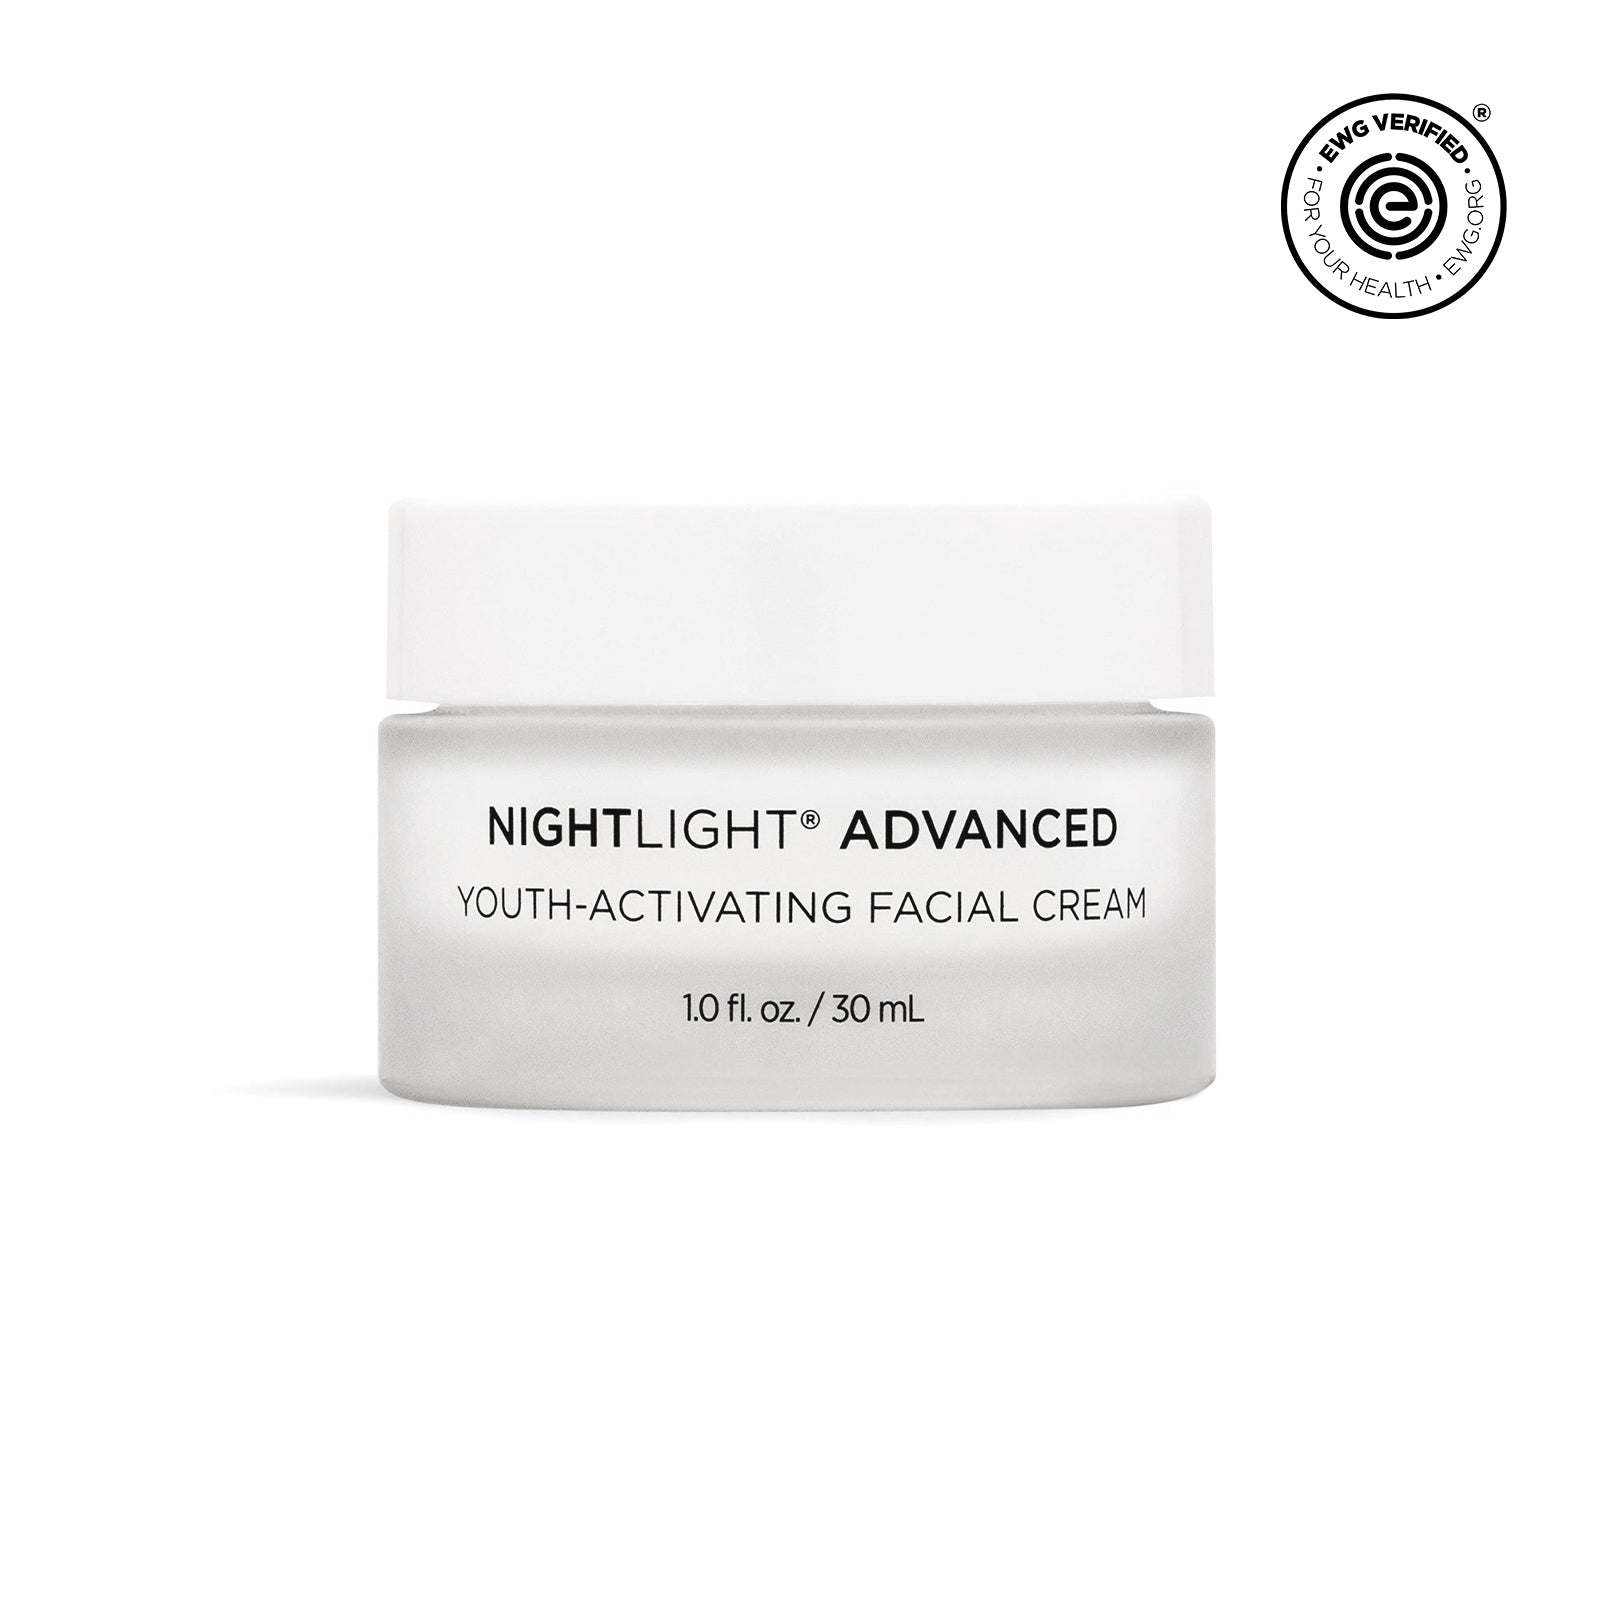 Nightlight® Advanced Facial Cream